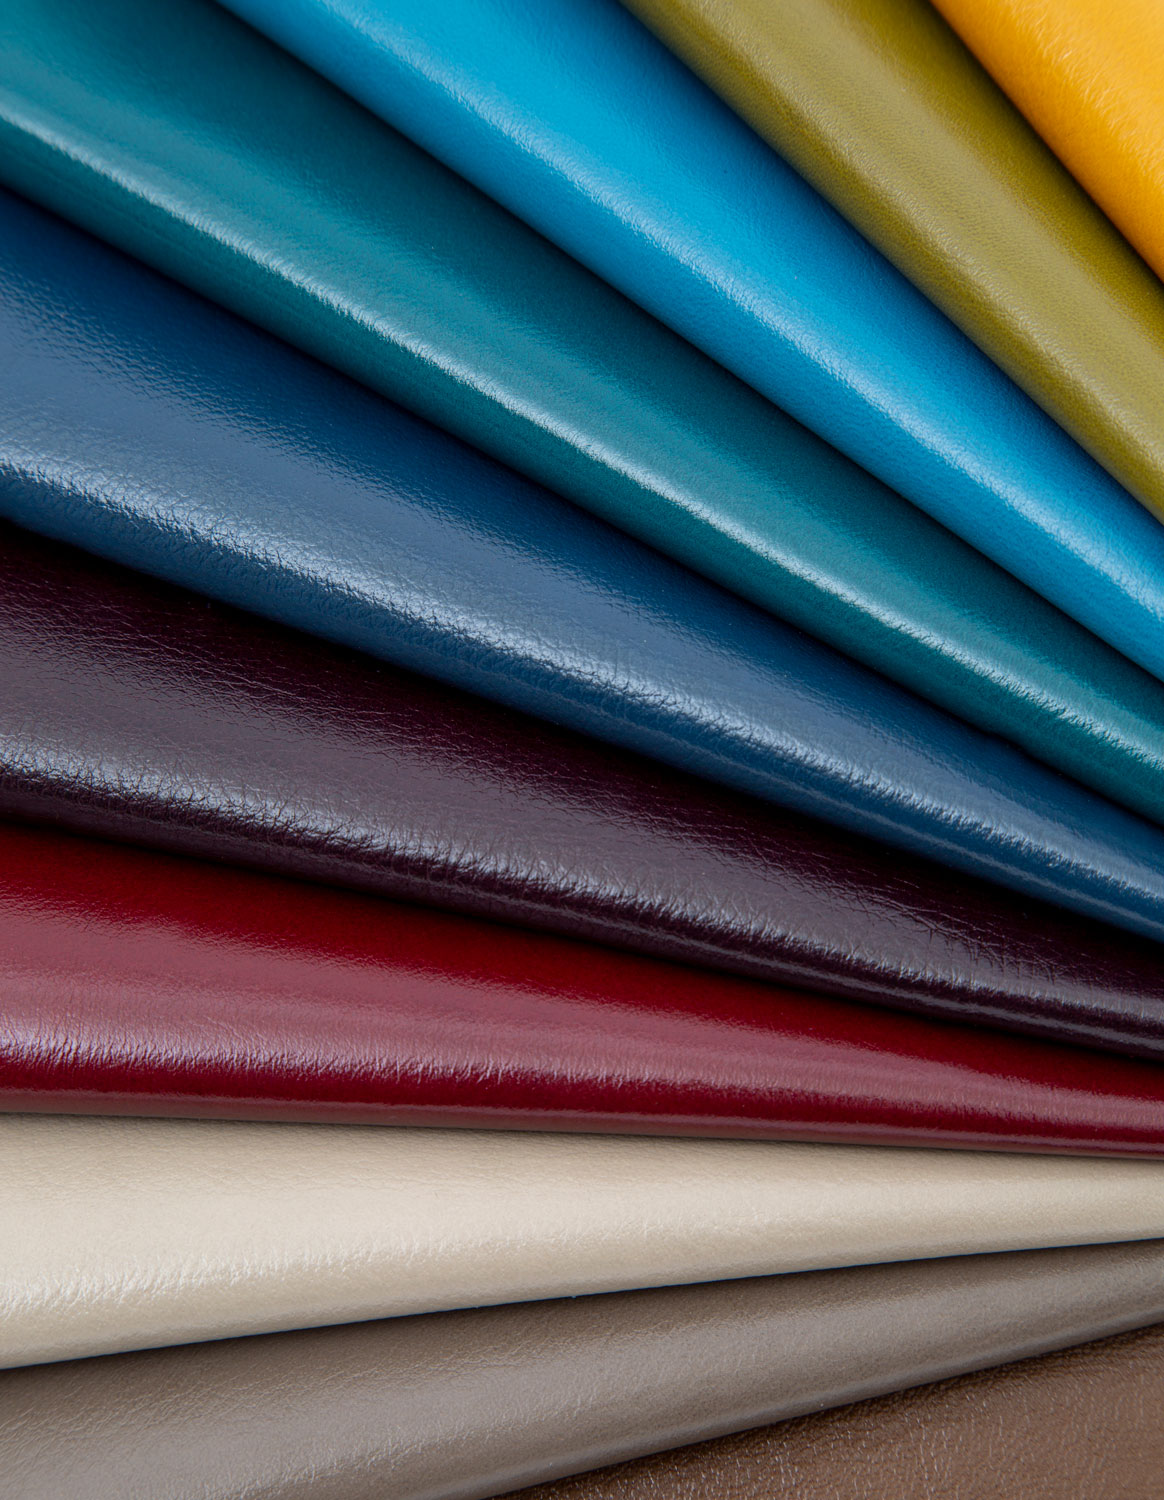 Wellington | Leather | Altfield | London (UK) Supplier Luxury Leather ...